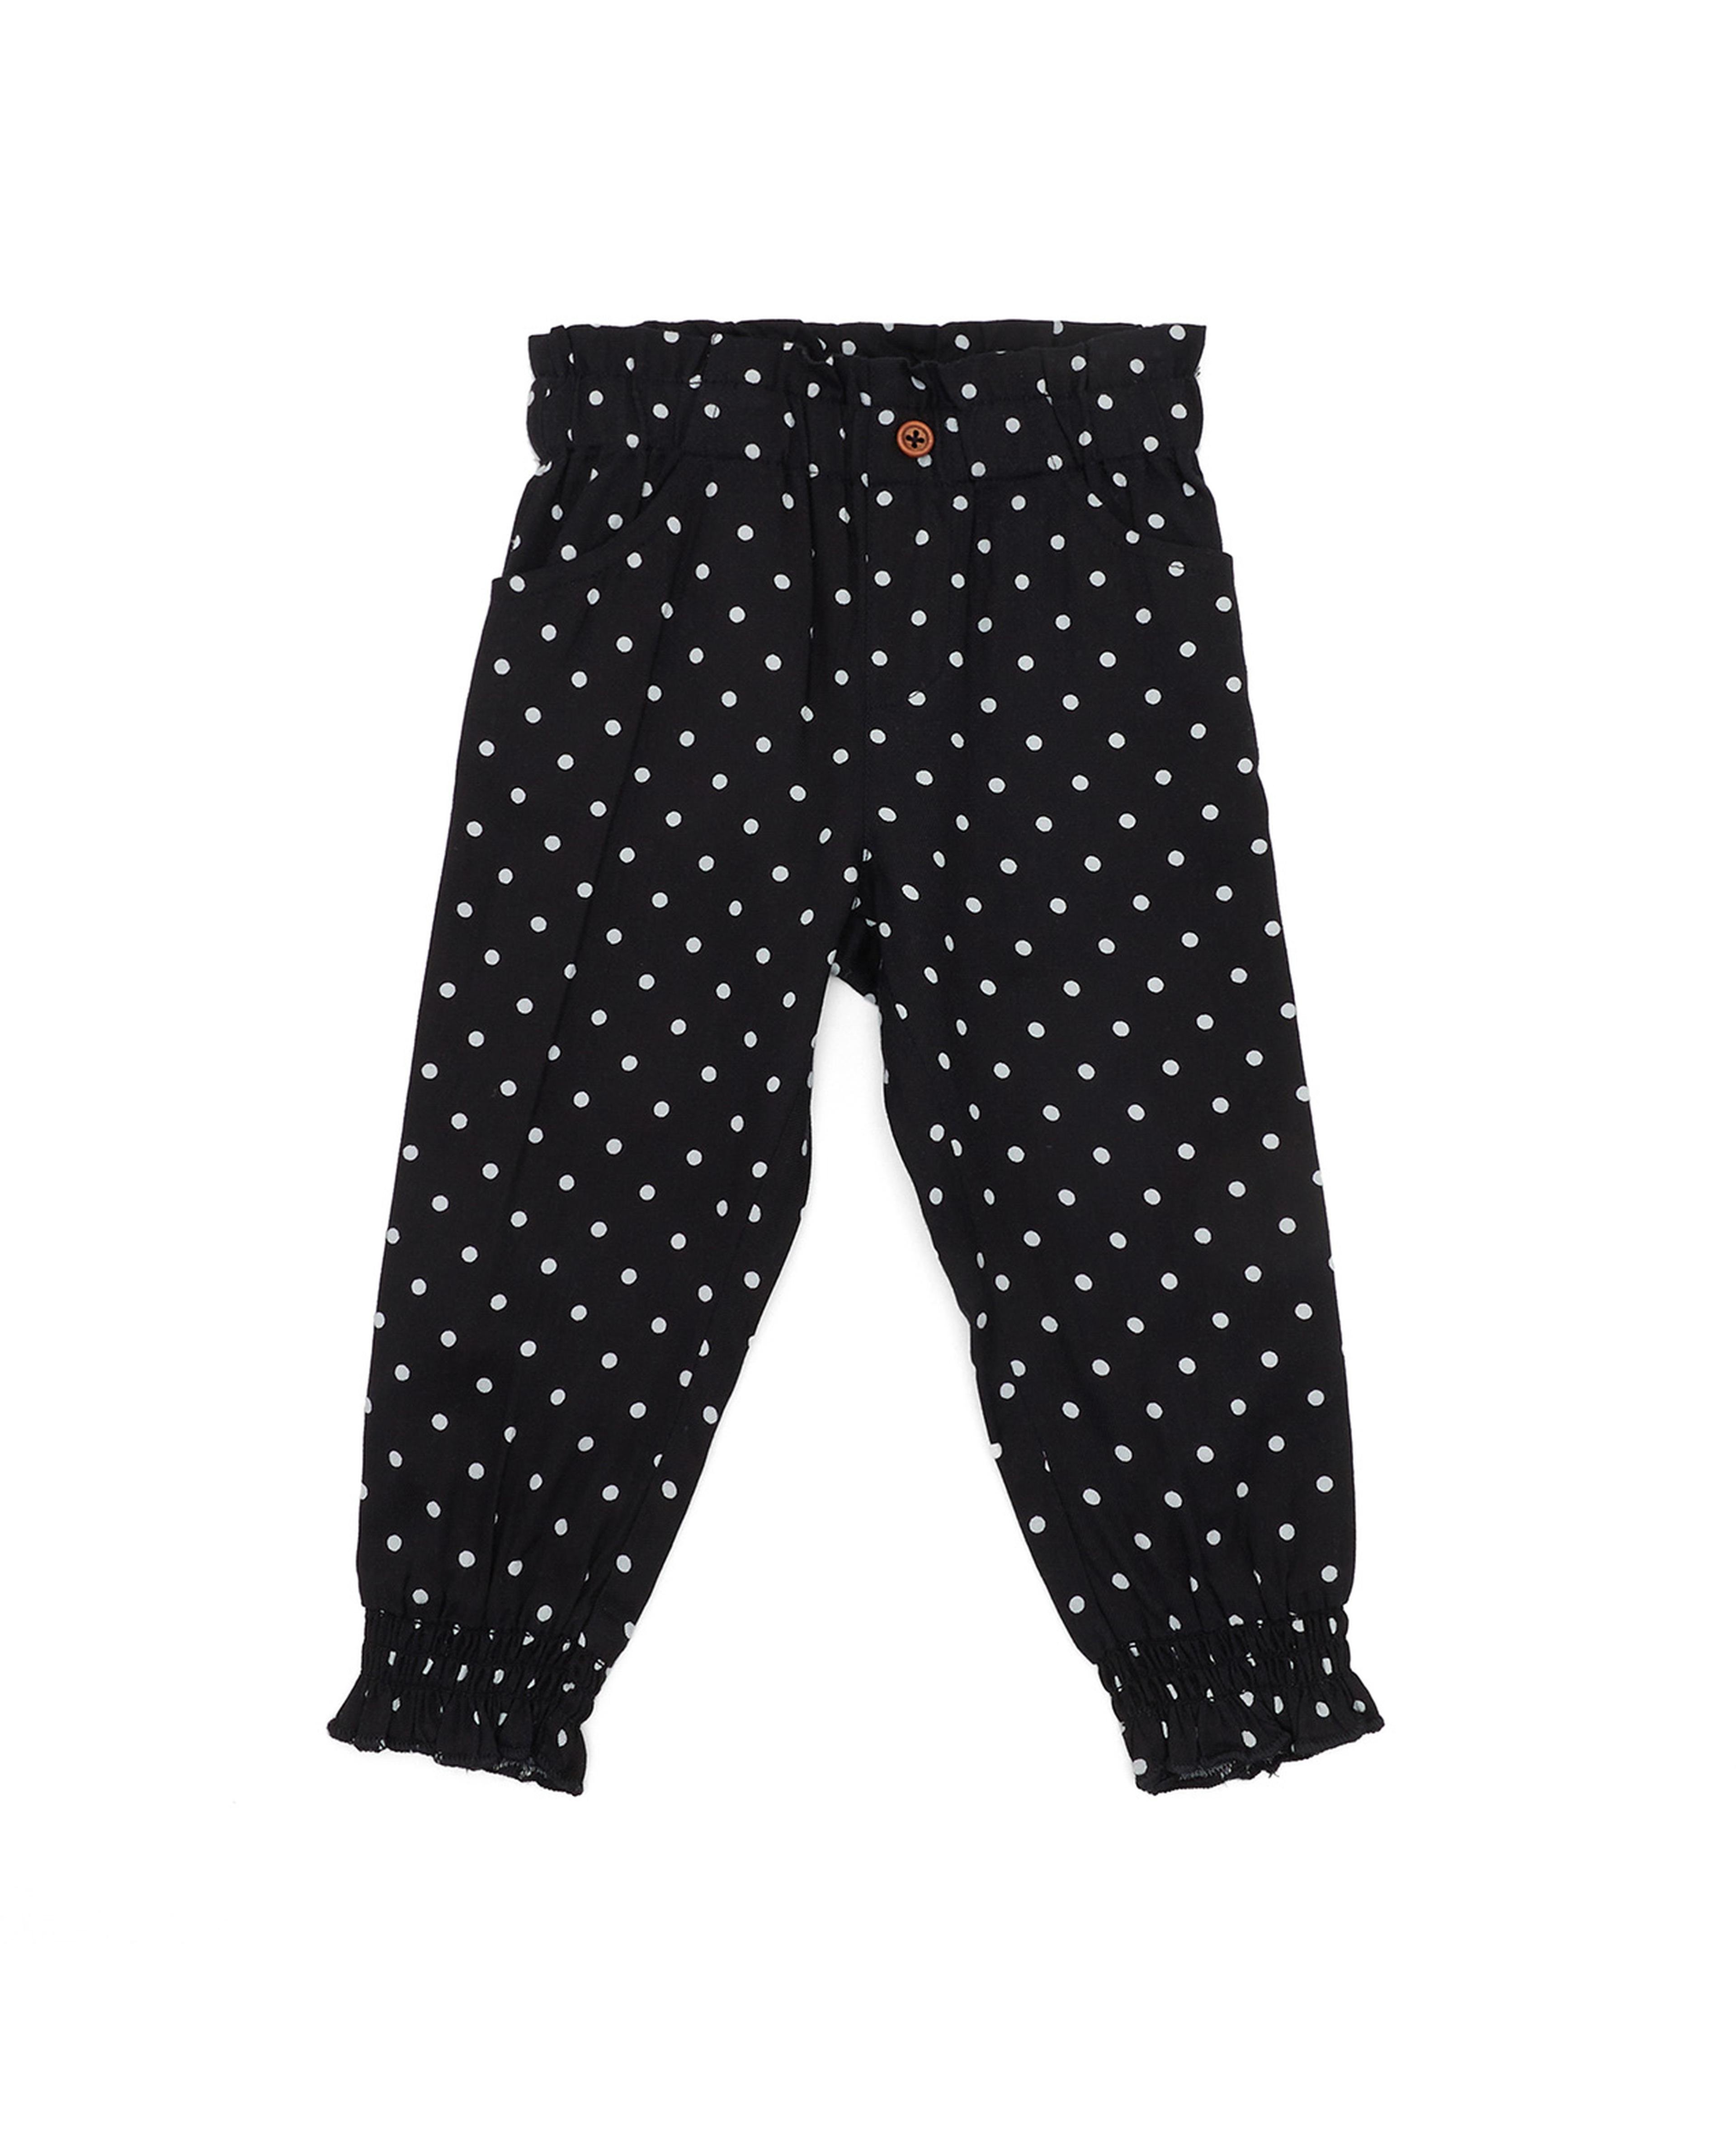 Polka Dot Printed Pants with Elastic Waist